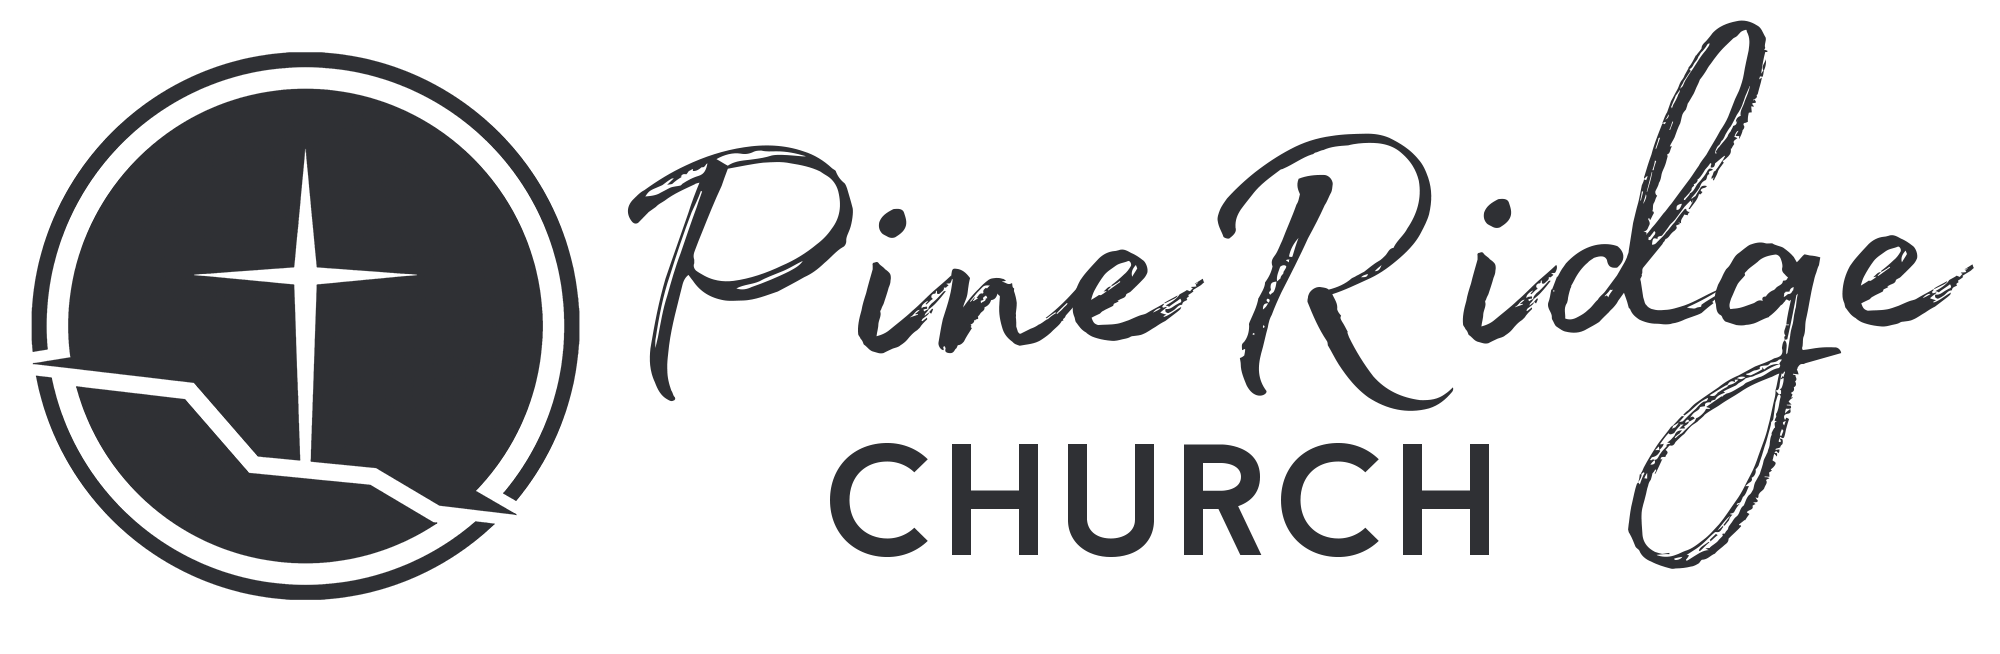 Pine Ridge Church PCA | Orlando, FL